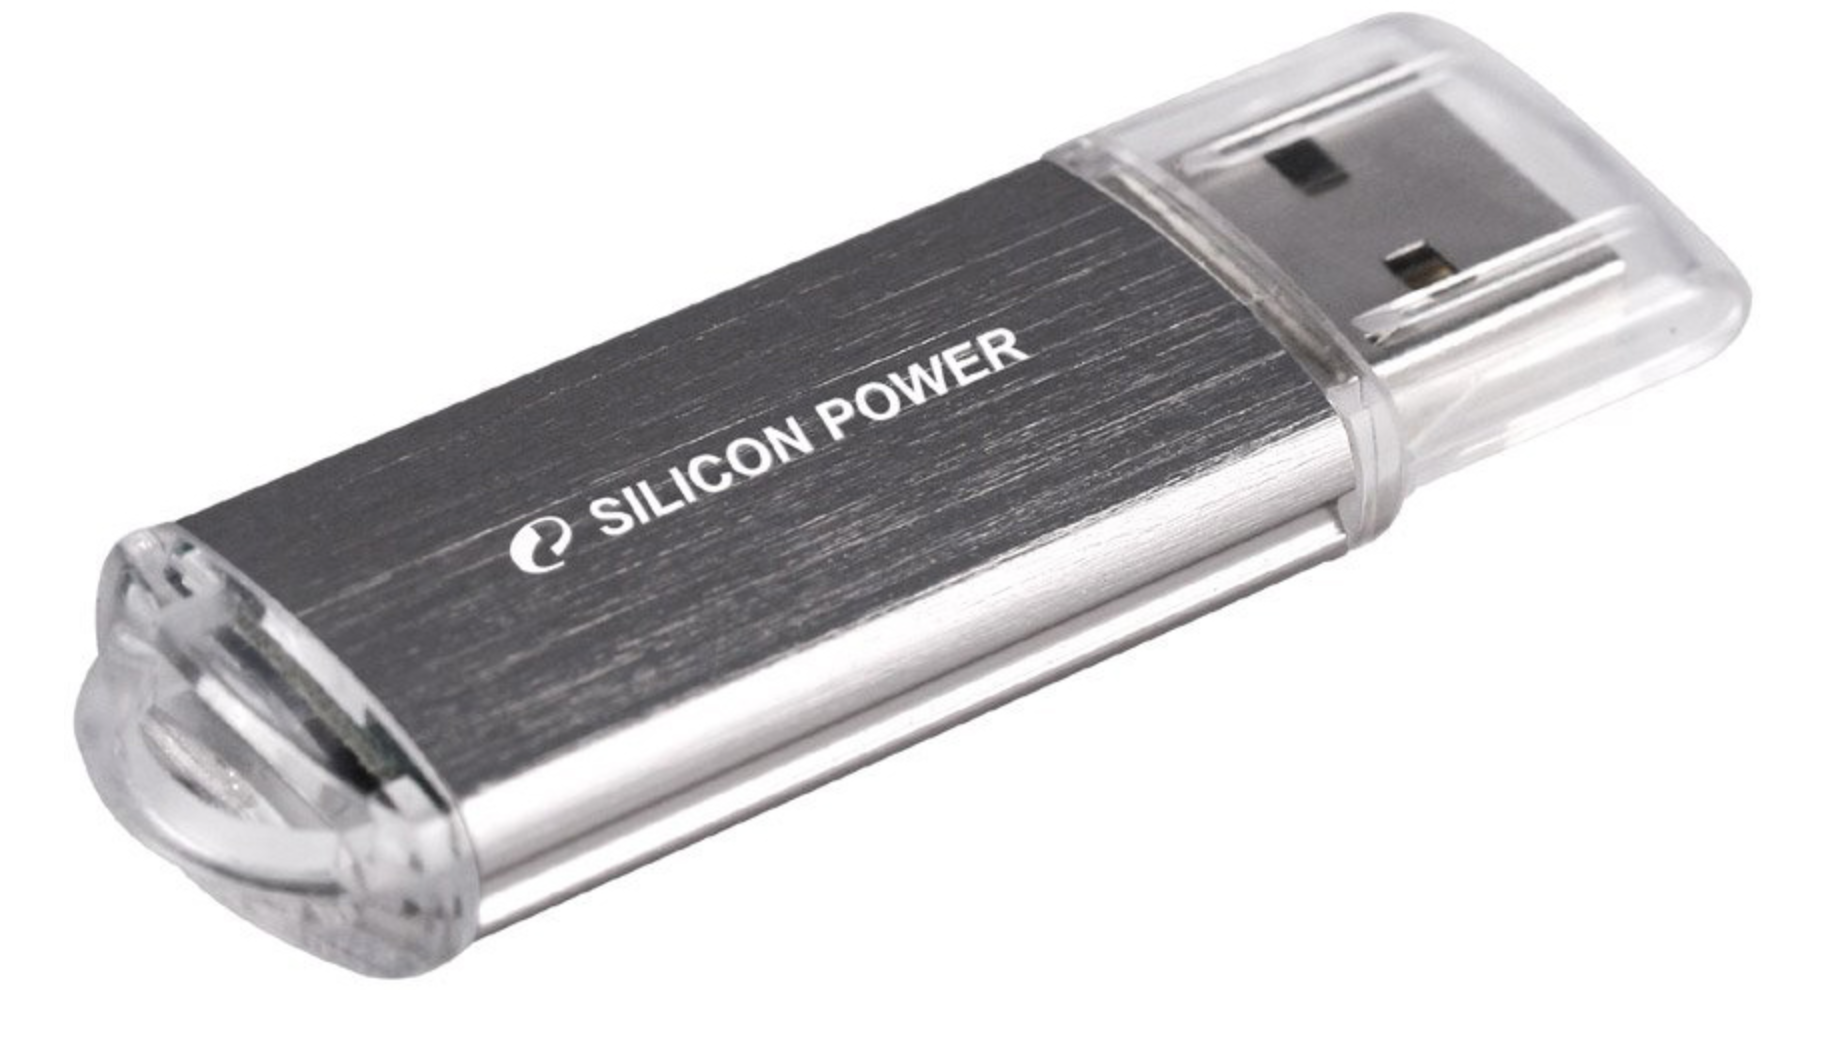 Накопители usb silicon power. Флешка SP Silicon Power 32gb. Флешка SP Silicon Power 8 GB. Флешка Silicon Power 16 GB. Флешка Silicon Power ultima II-I 32гб Silver.